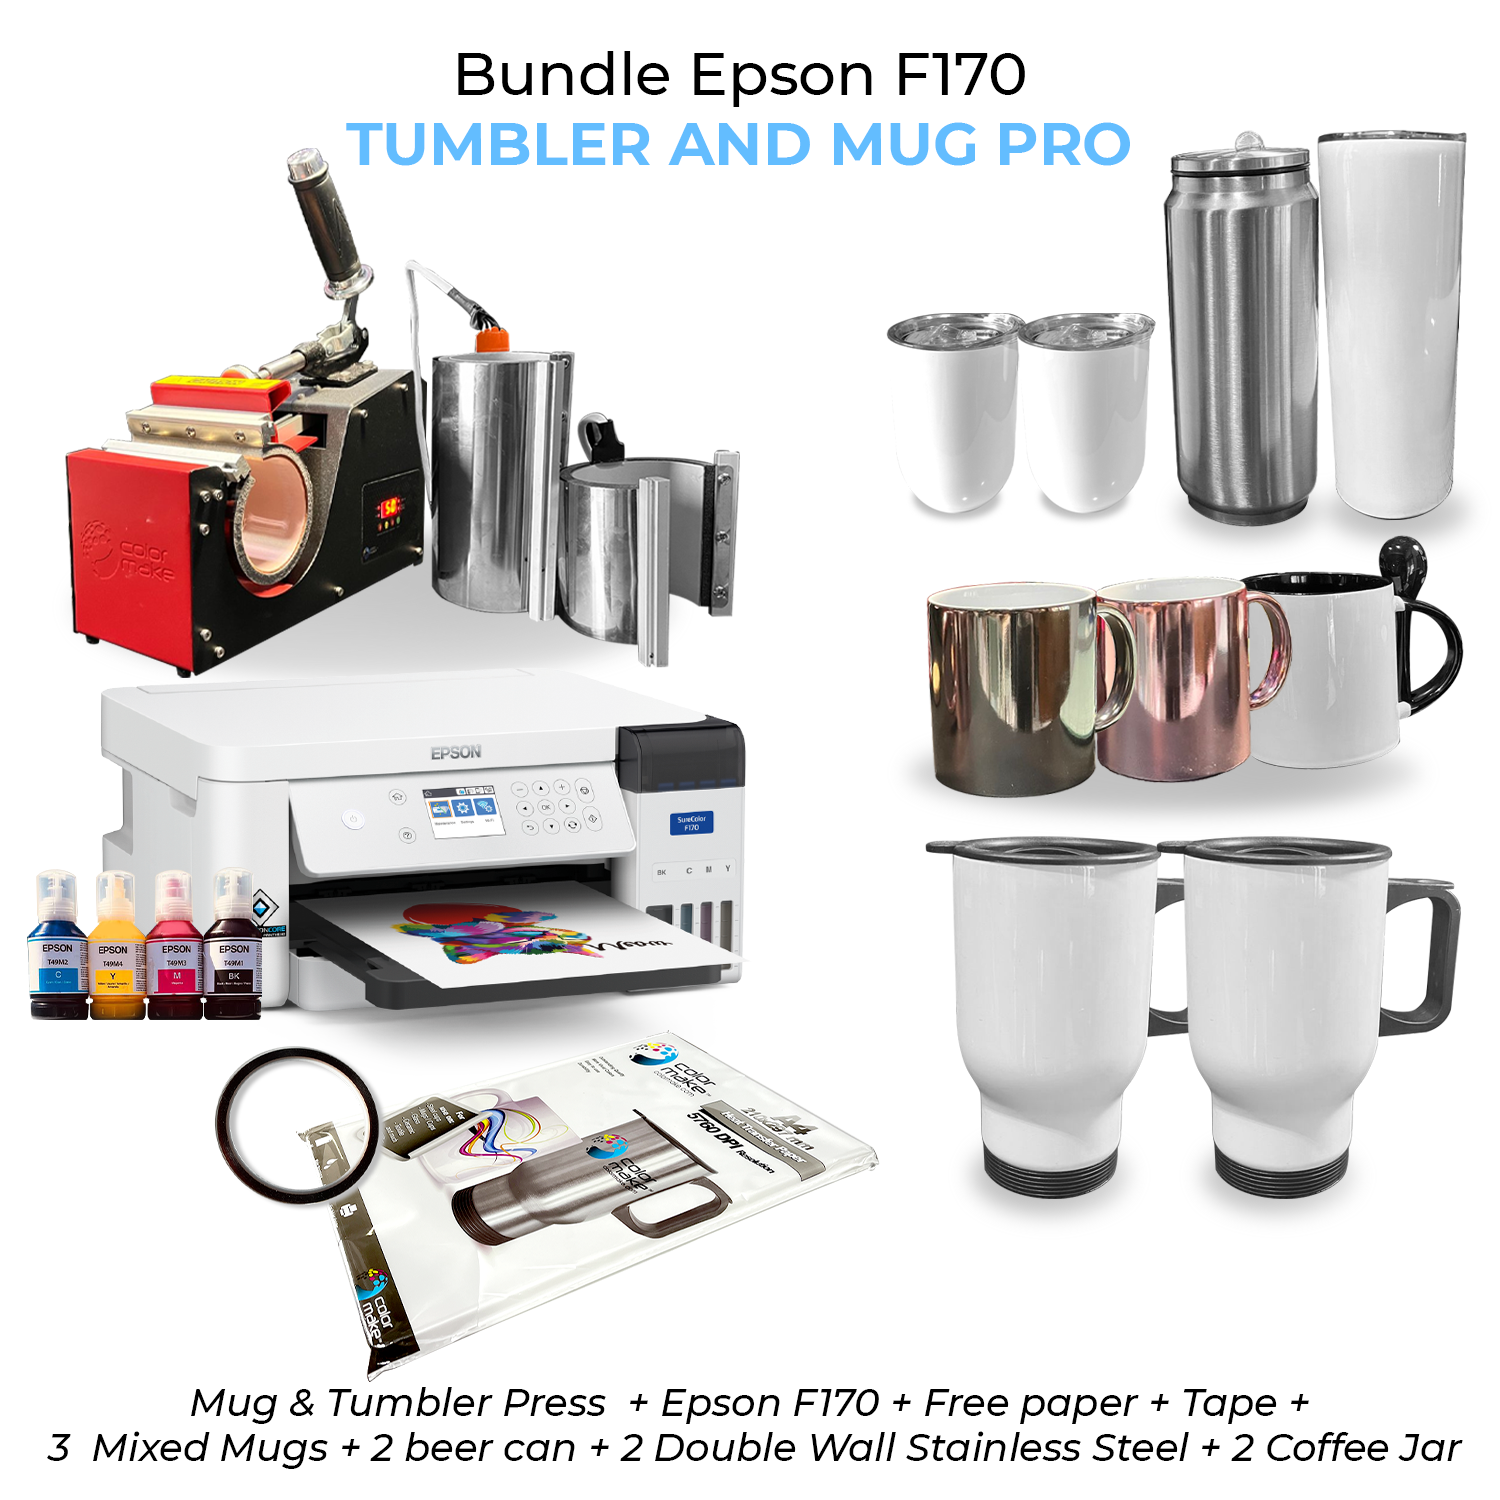 Bundle Epson F170 Tumbler and Mug Pro | Cyber Days Deal